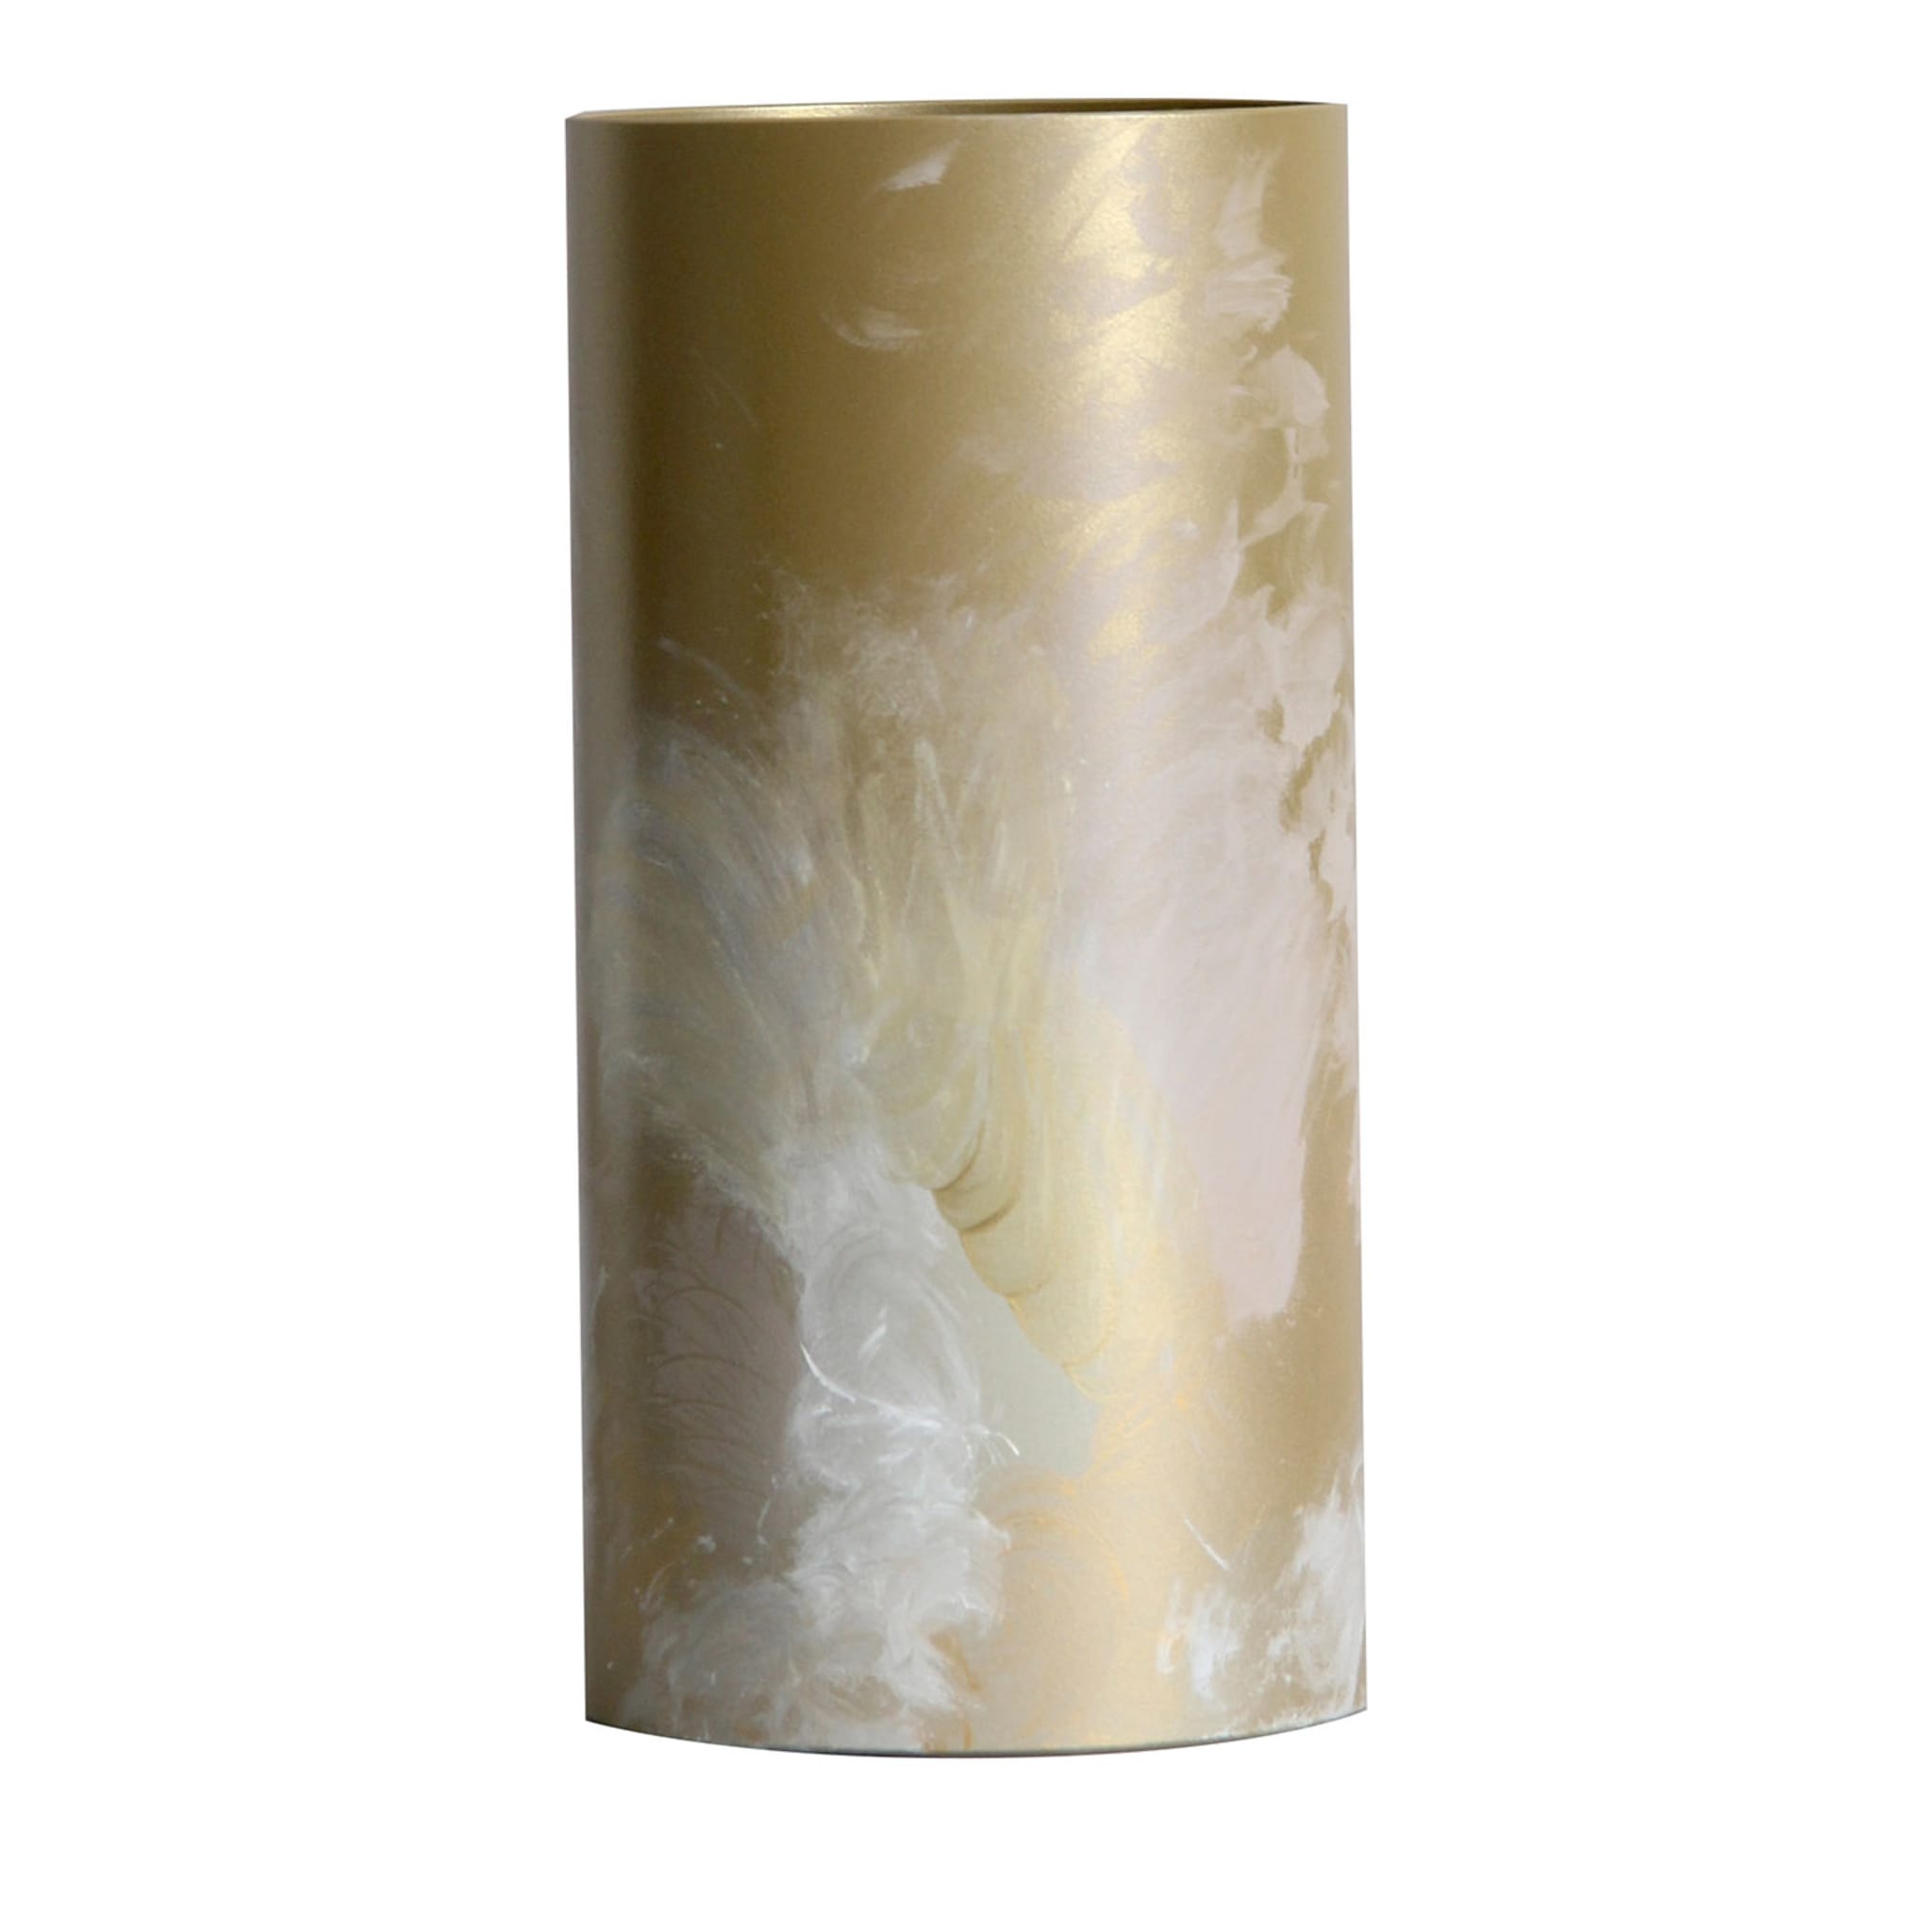 Flora M Cylindrical Golden Vase by Gabriela Azar Rubagotti #2 - Main view